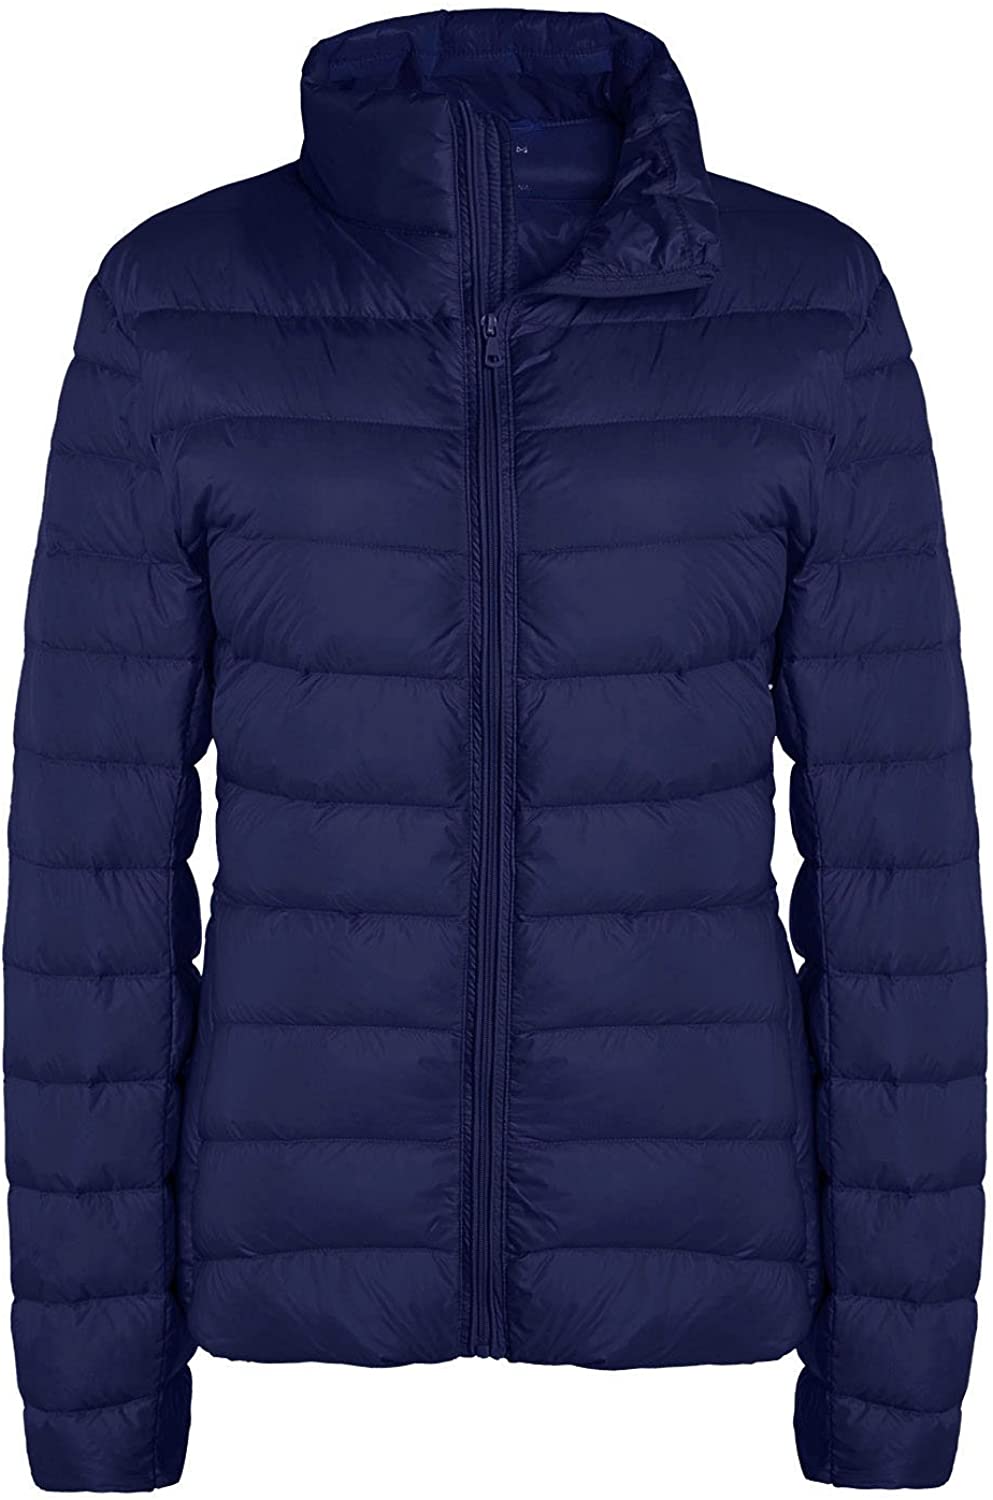 ZSHOW Womens Lightweight Skin Coat Packable Windproof Jacket